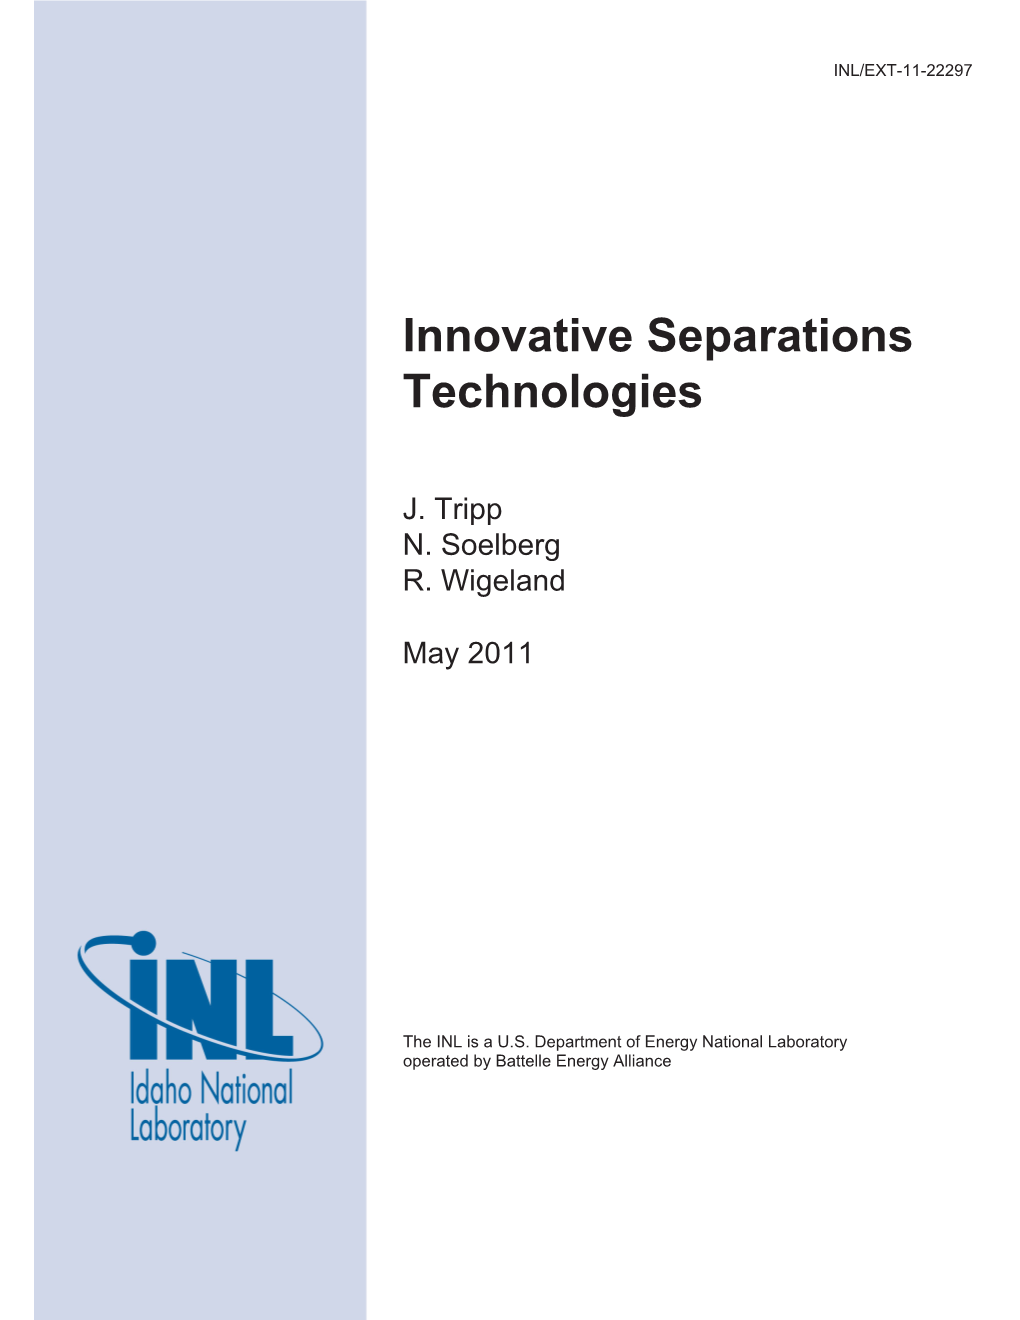 Innovative Separations Technologies